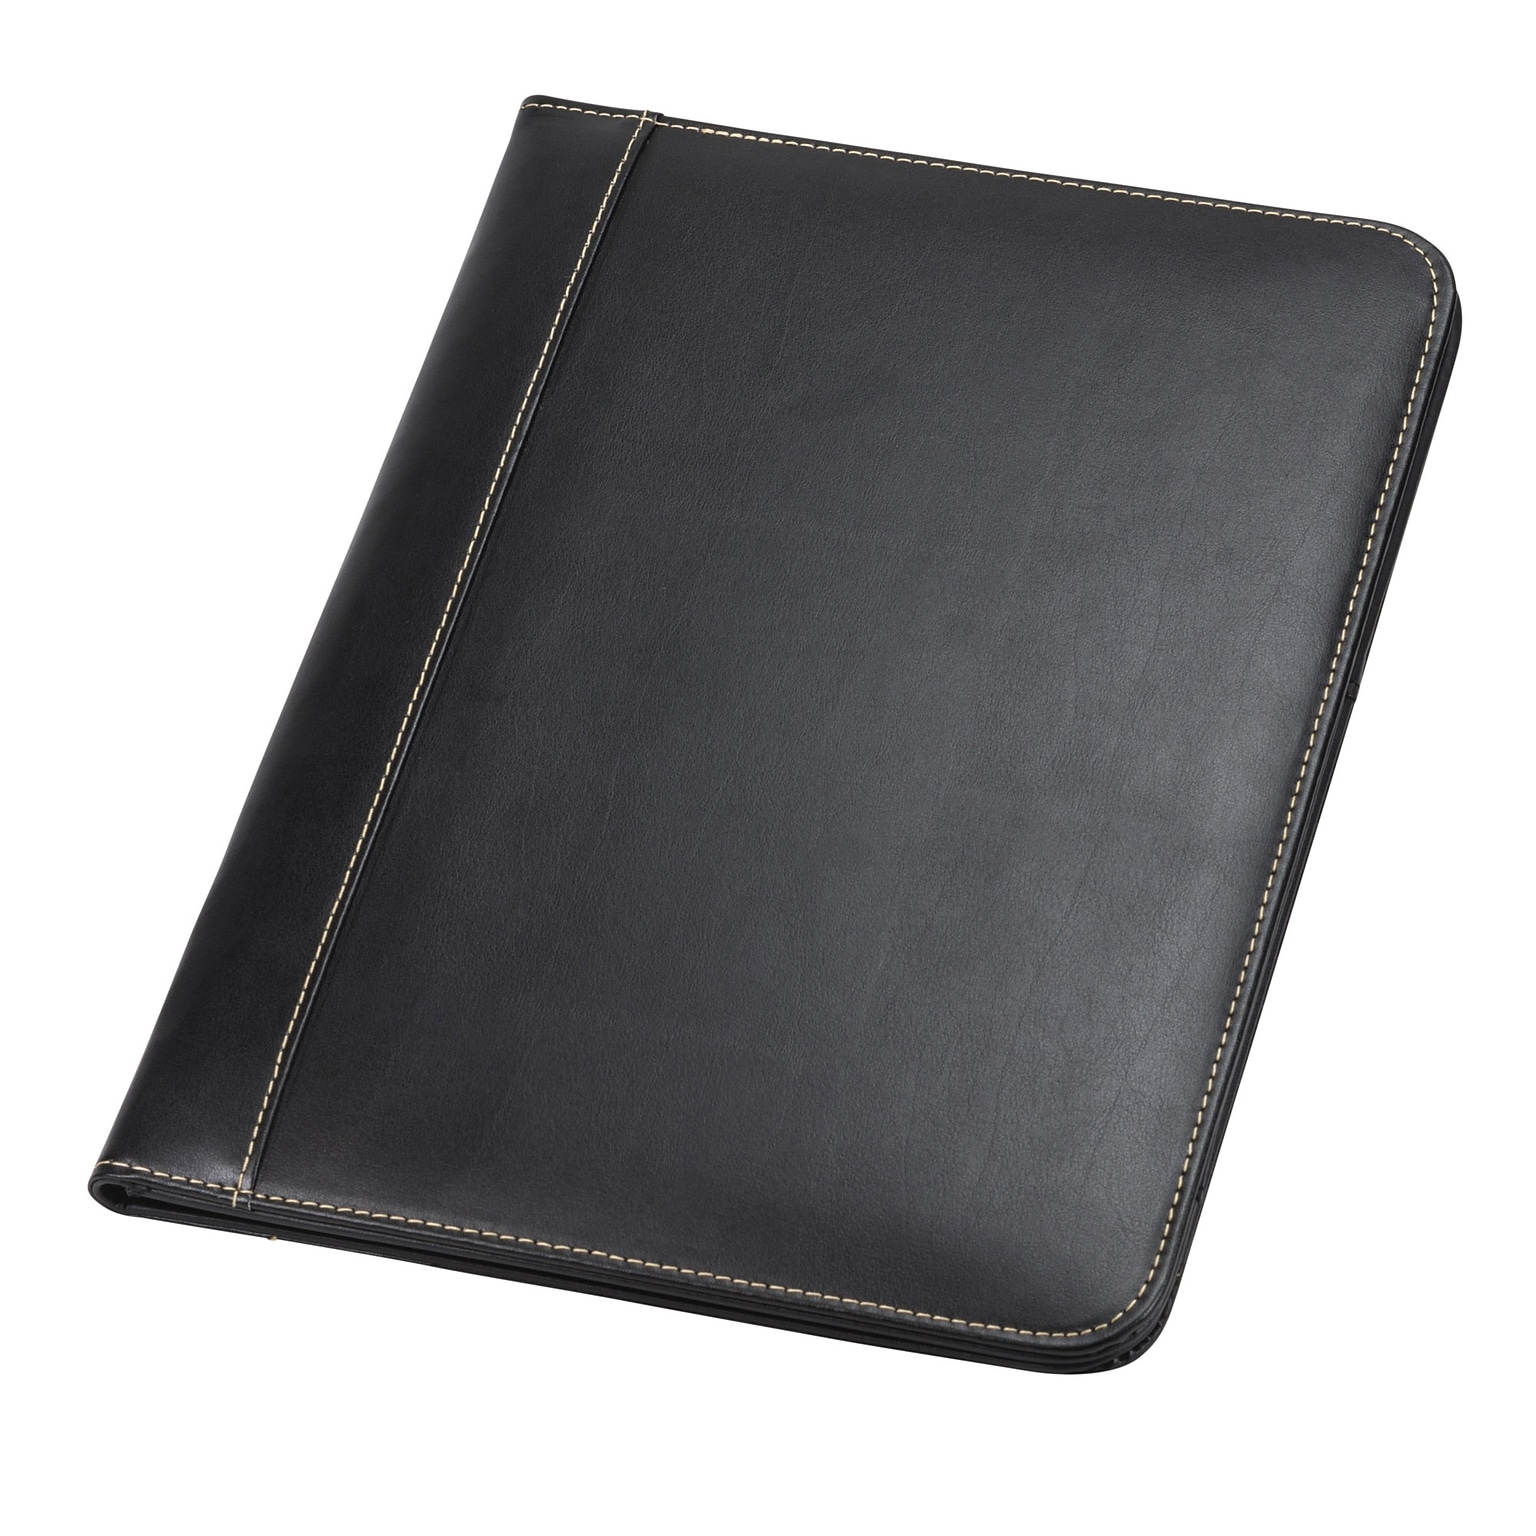 Samsill Leather Portfolio Case, Black (71710)